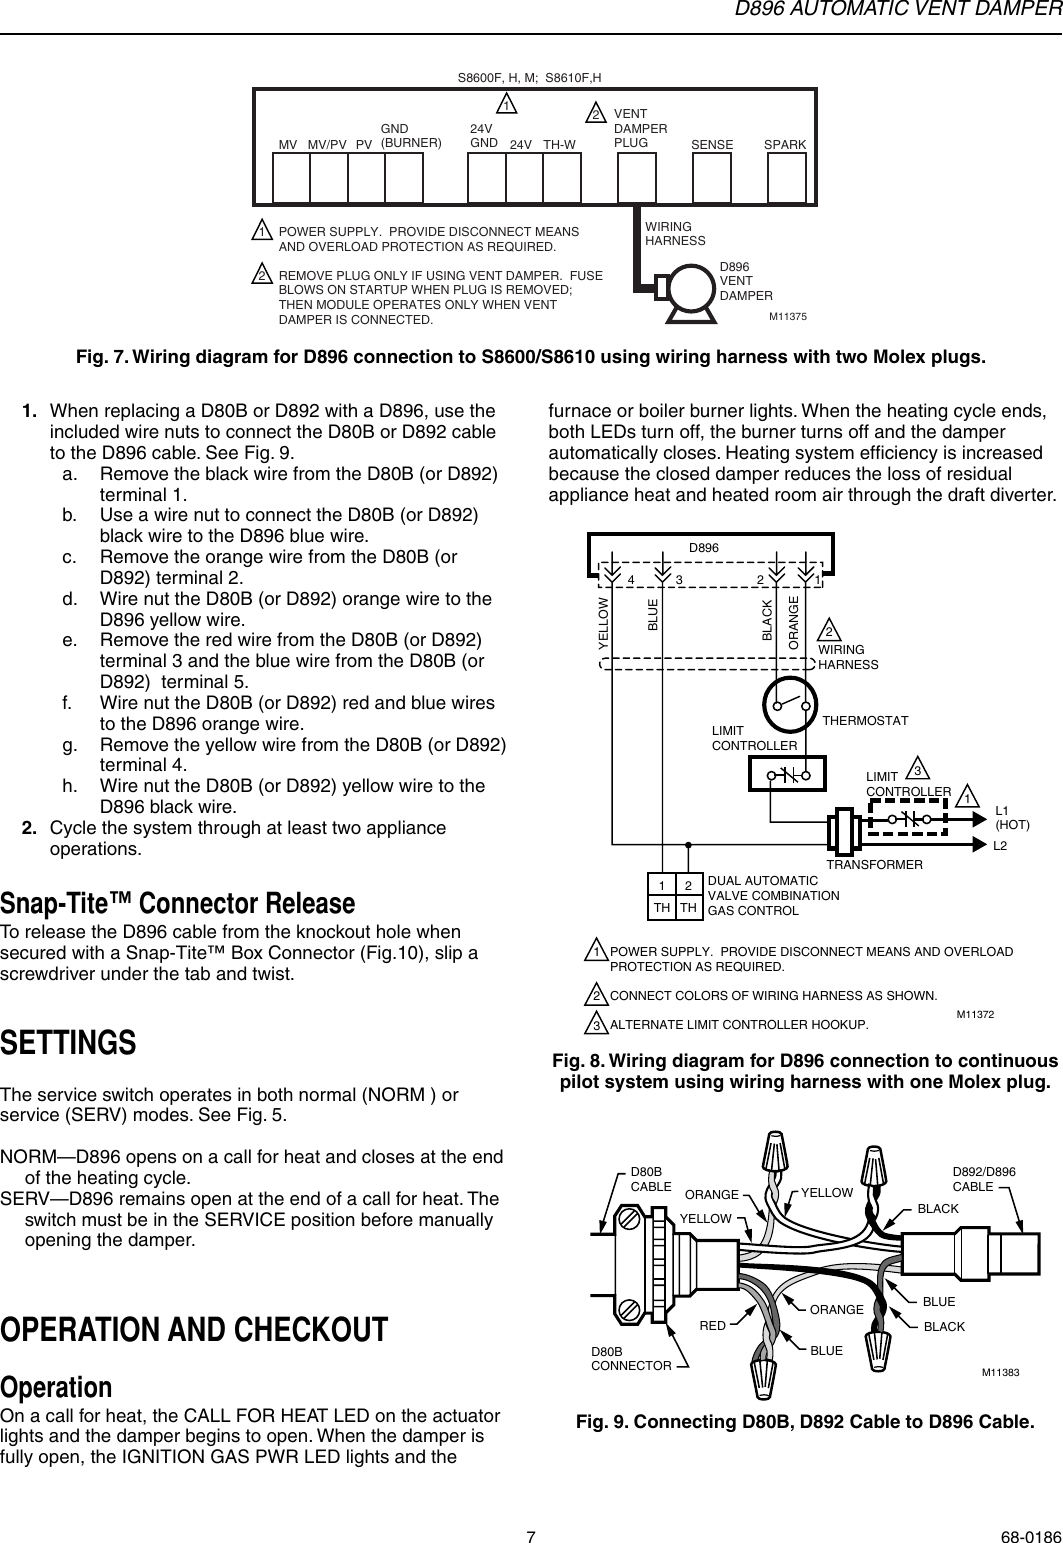 Page 7 of 12 - Honeywell Honeywell-Automatic-Vent-Damper-D896-Users-Manual- 68-0186 - D896 Automatic Vent Damper  Honeywell-automatic-vent-damper-d896-users-manual